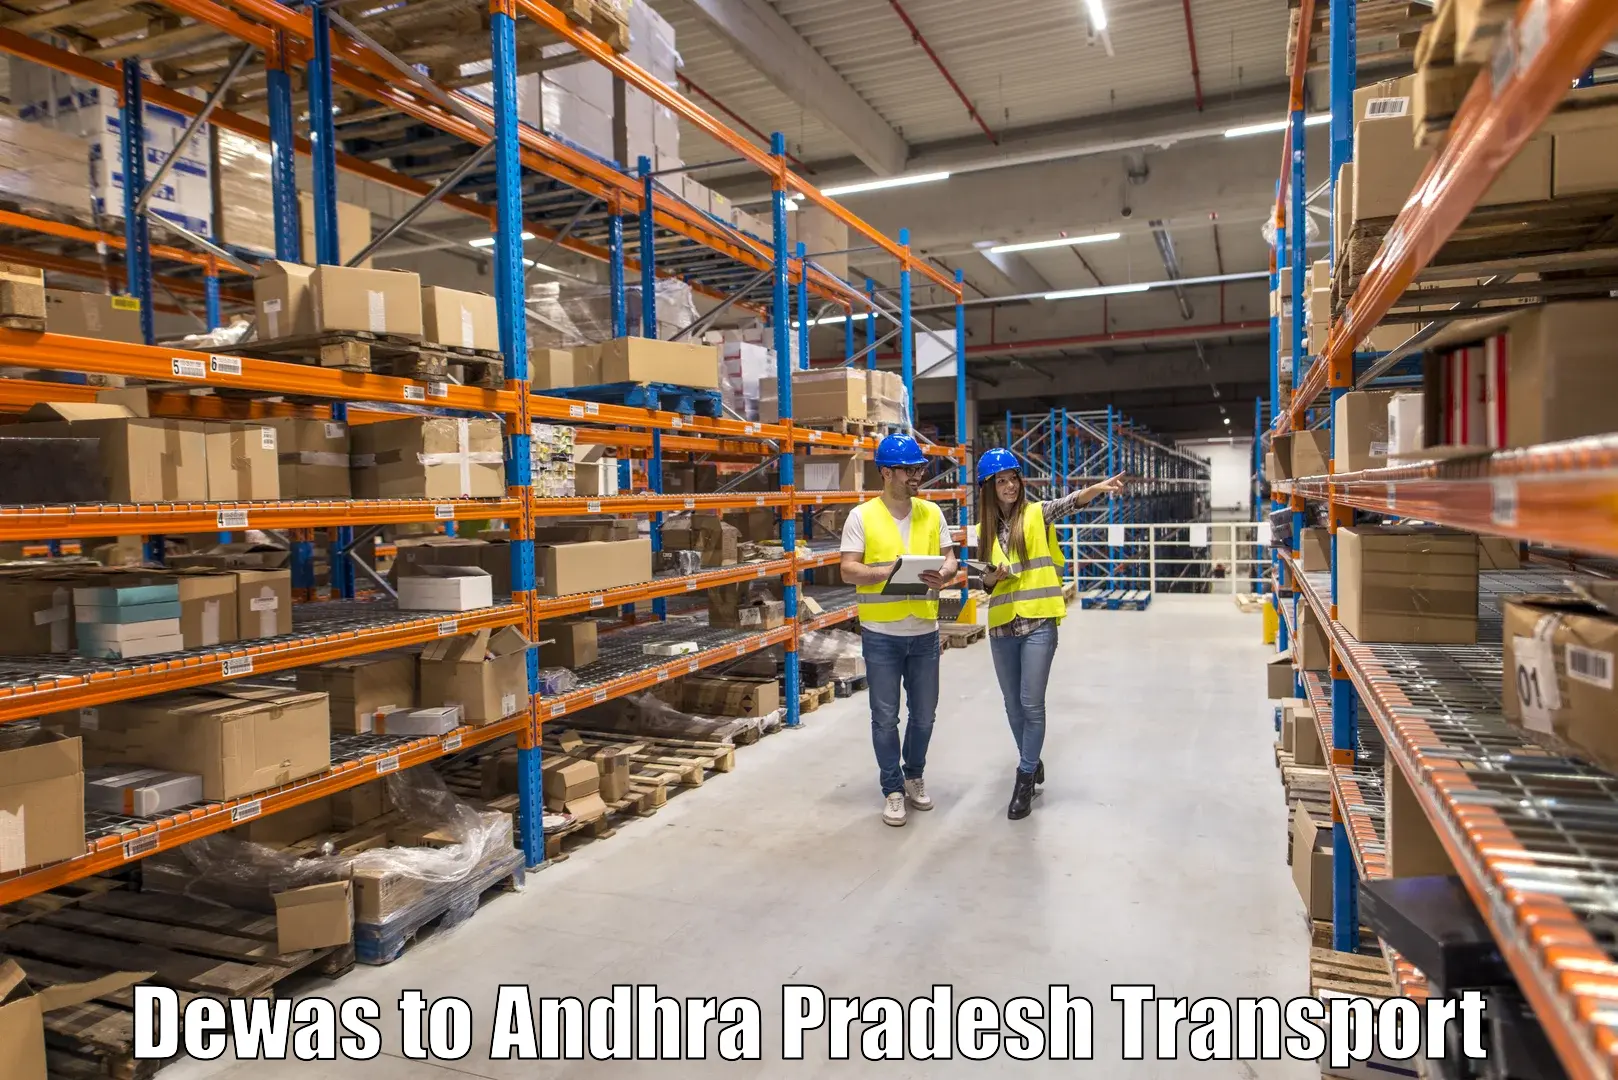 Container transport service Dewas to Andhra Pradesh